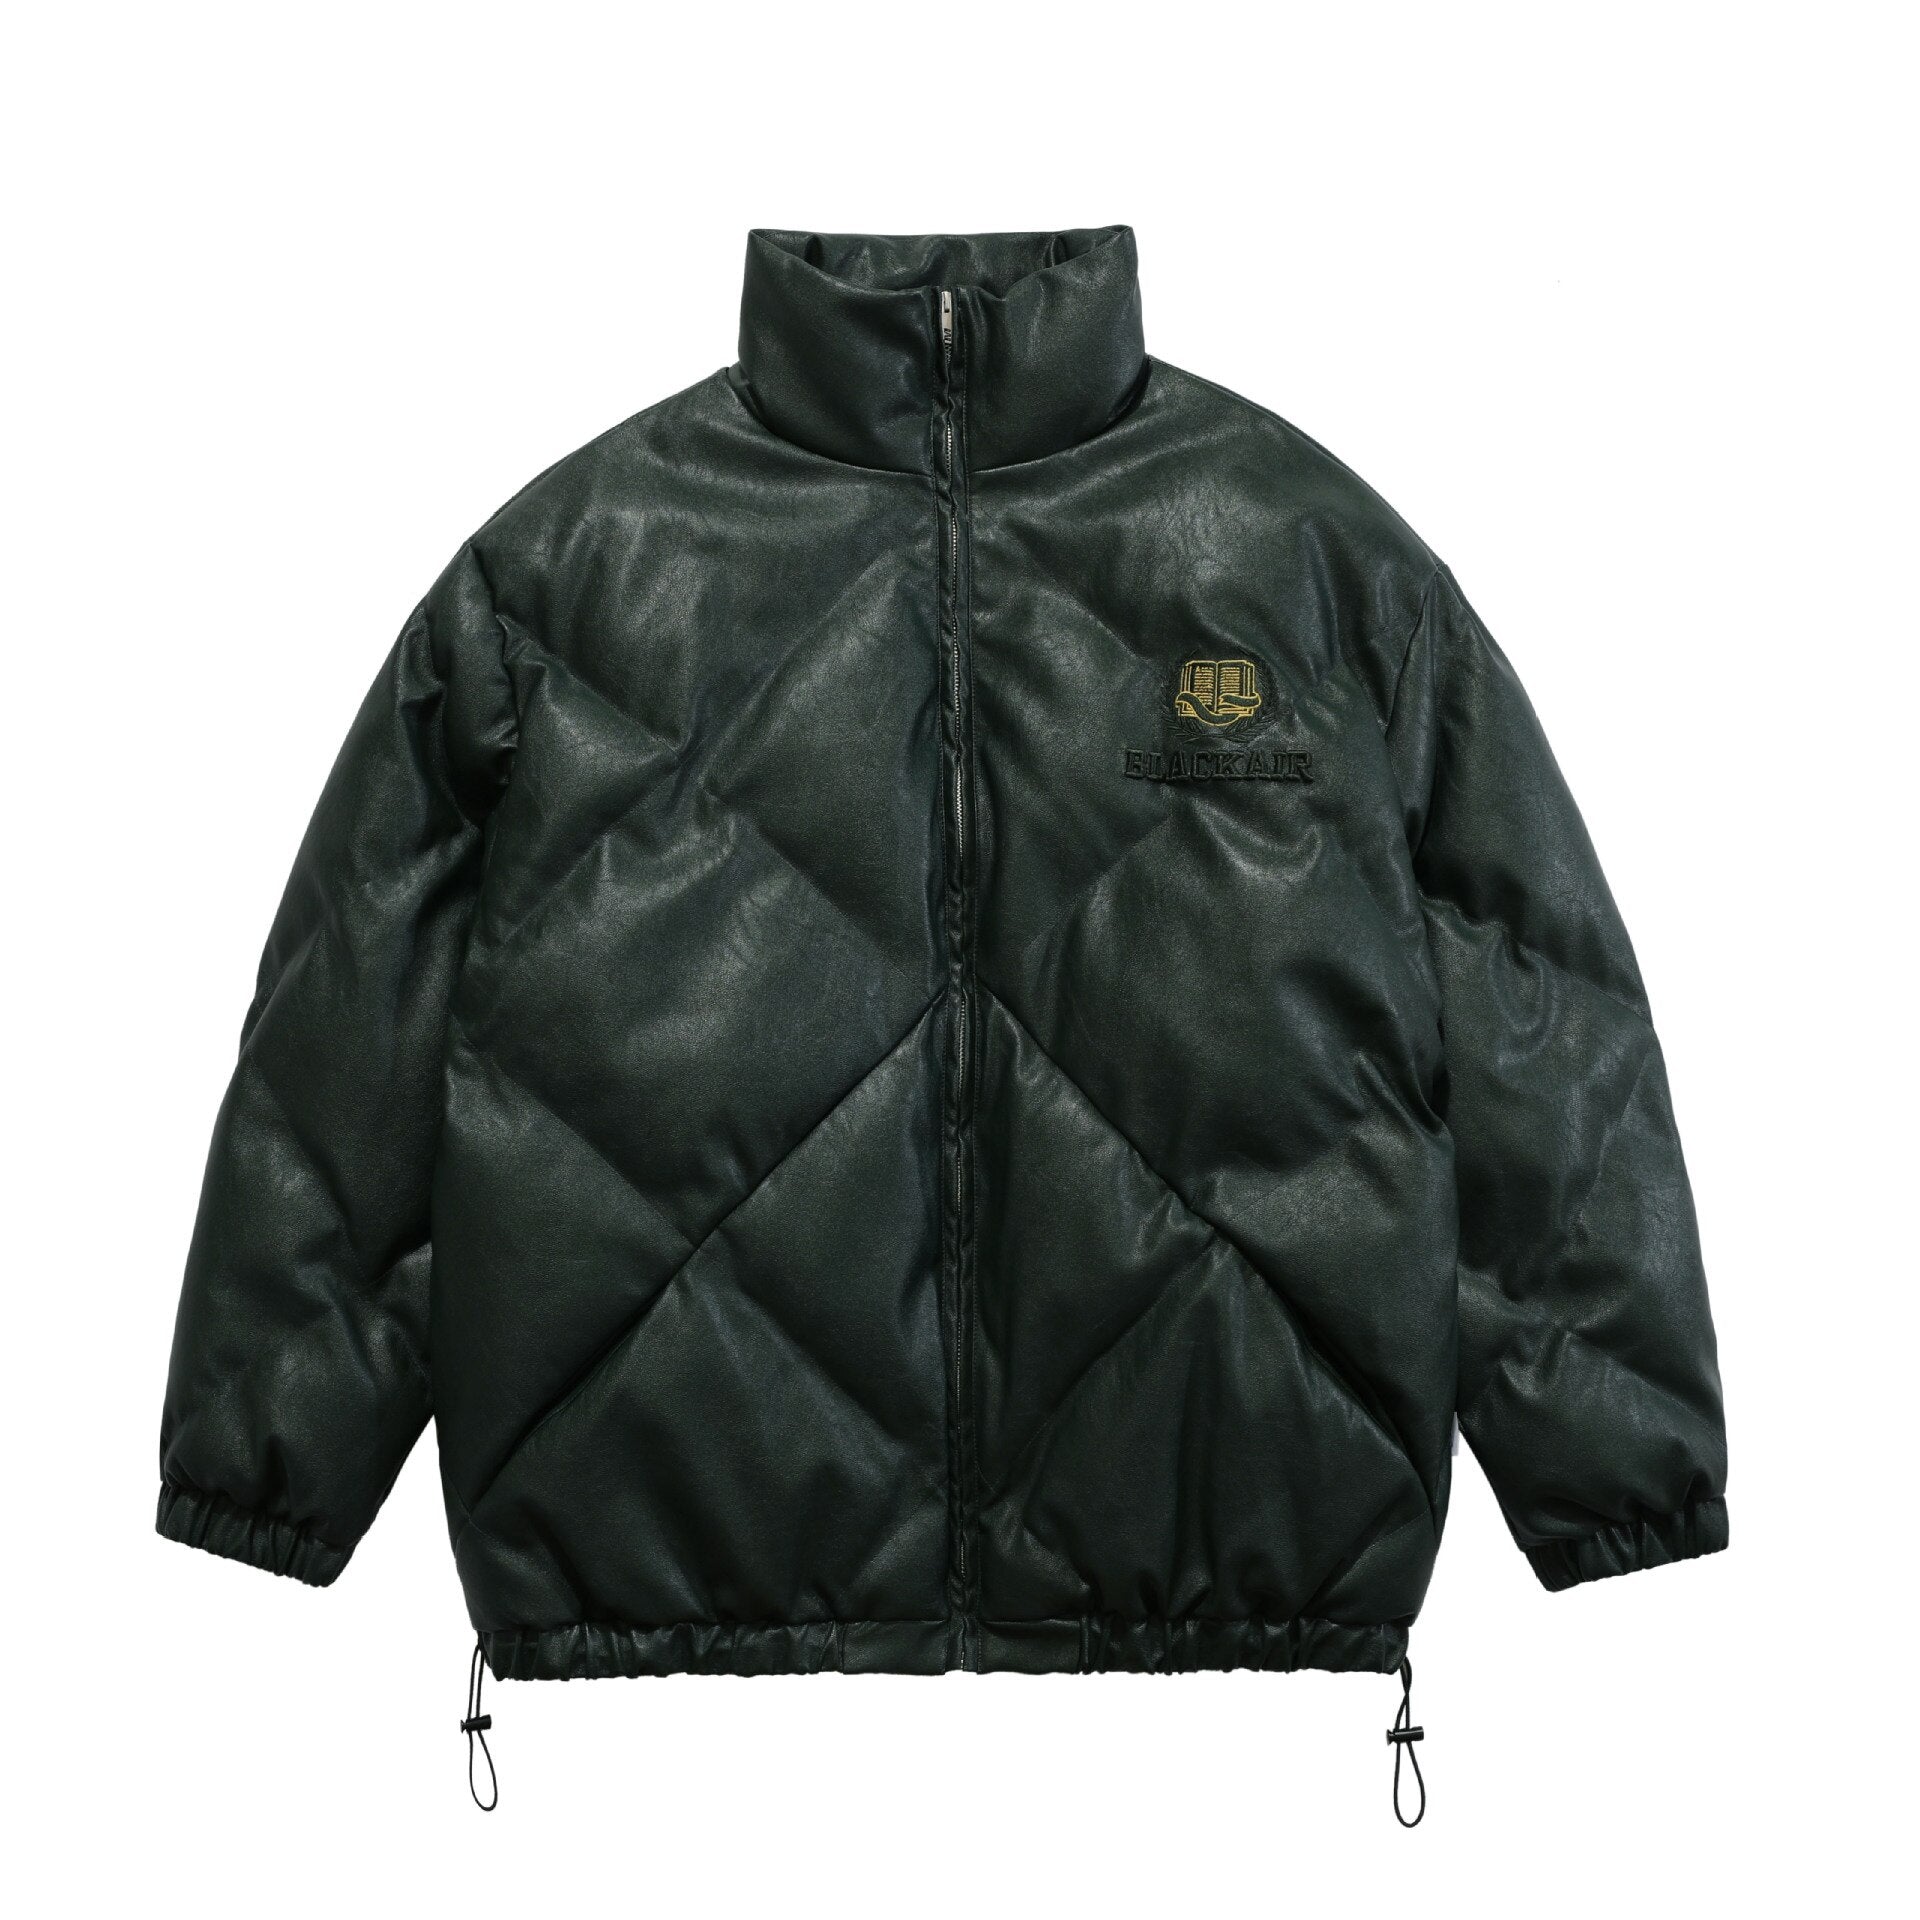 MadeExtreme PU Leather Coat